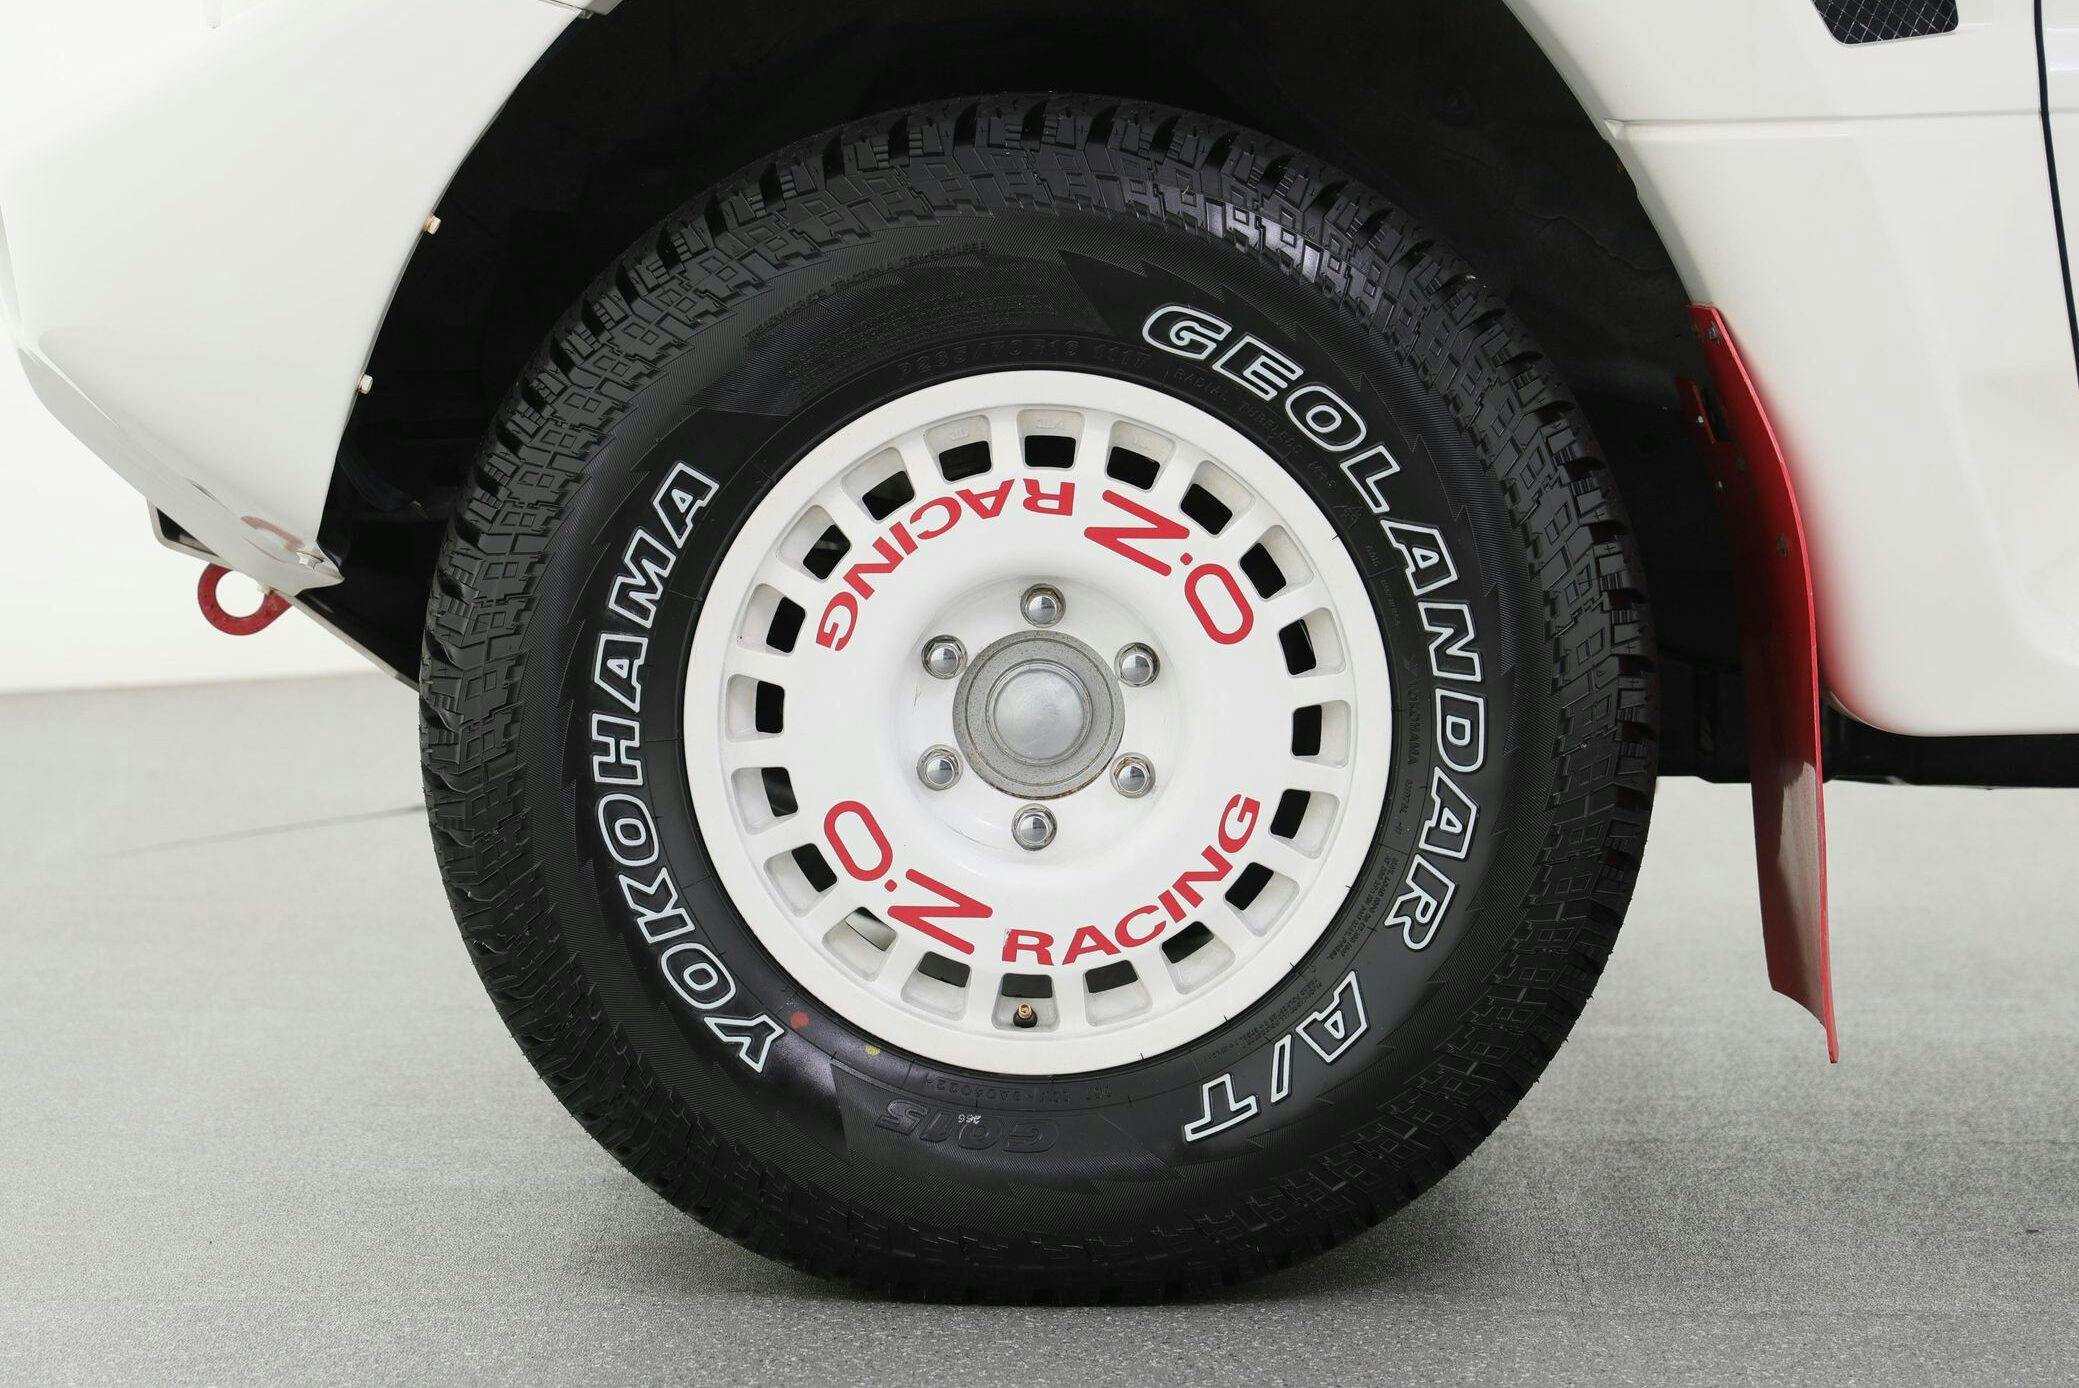 1998 Mitsubishi Pajero Evolution front wheel tire